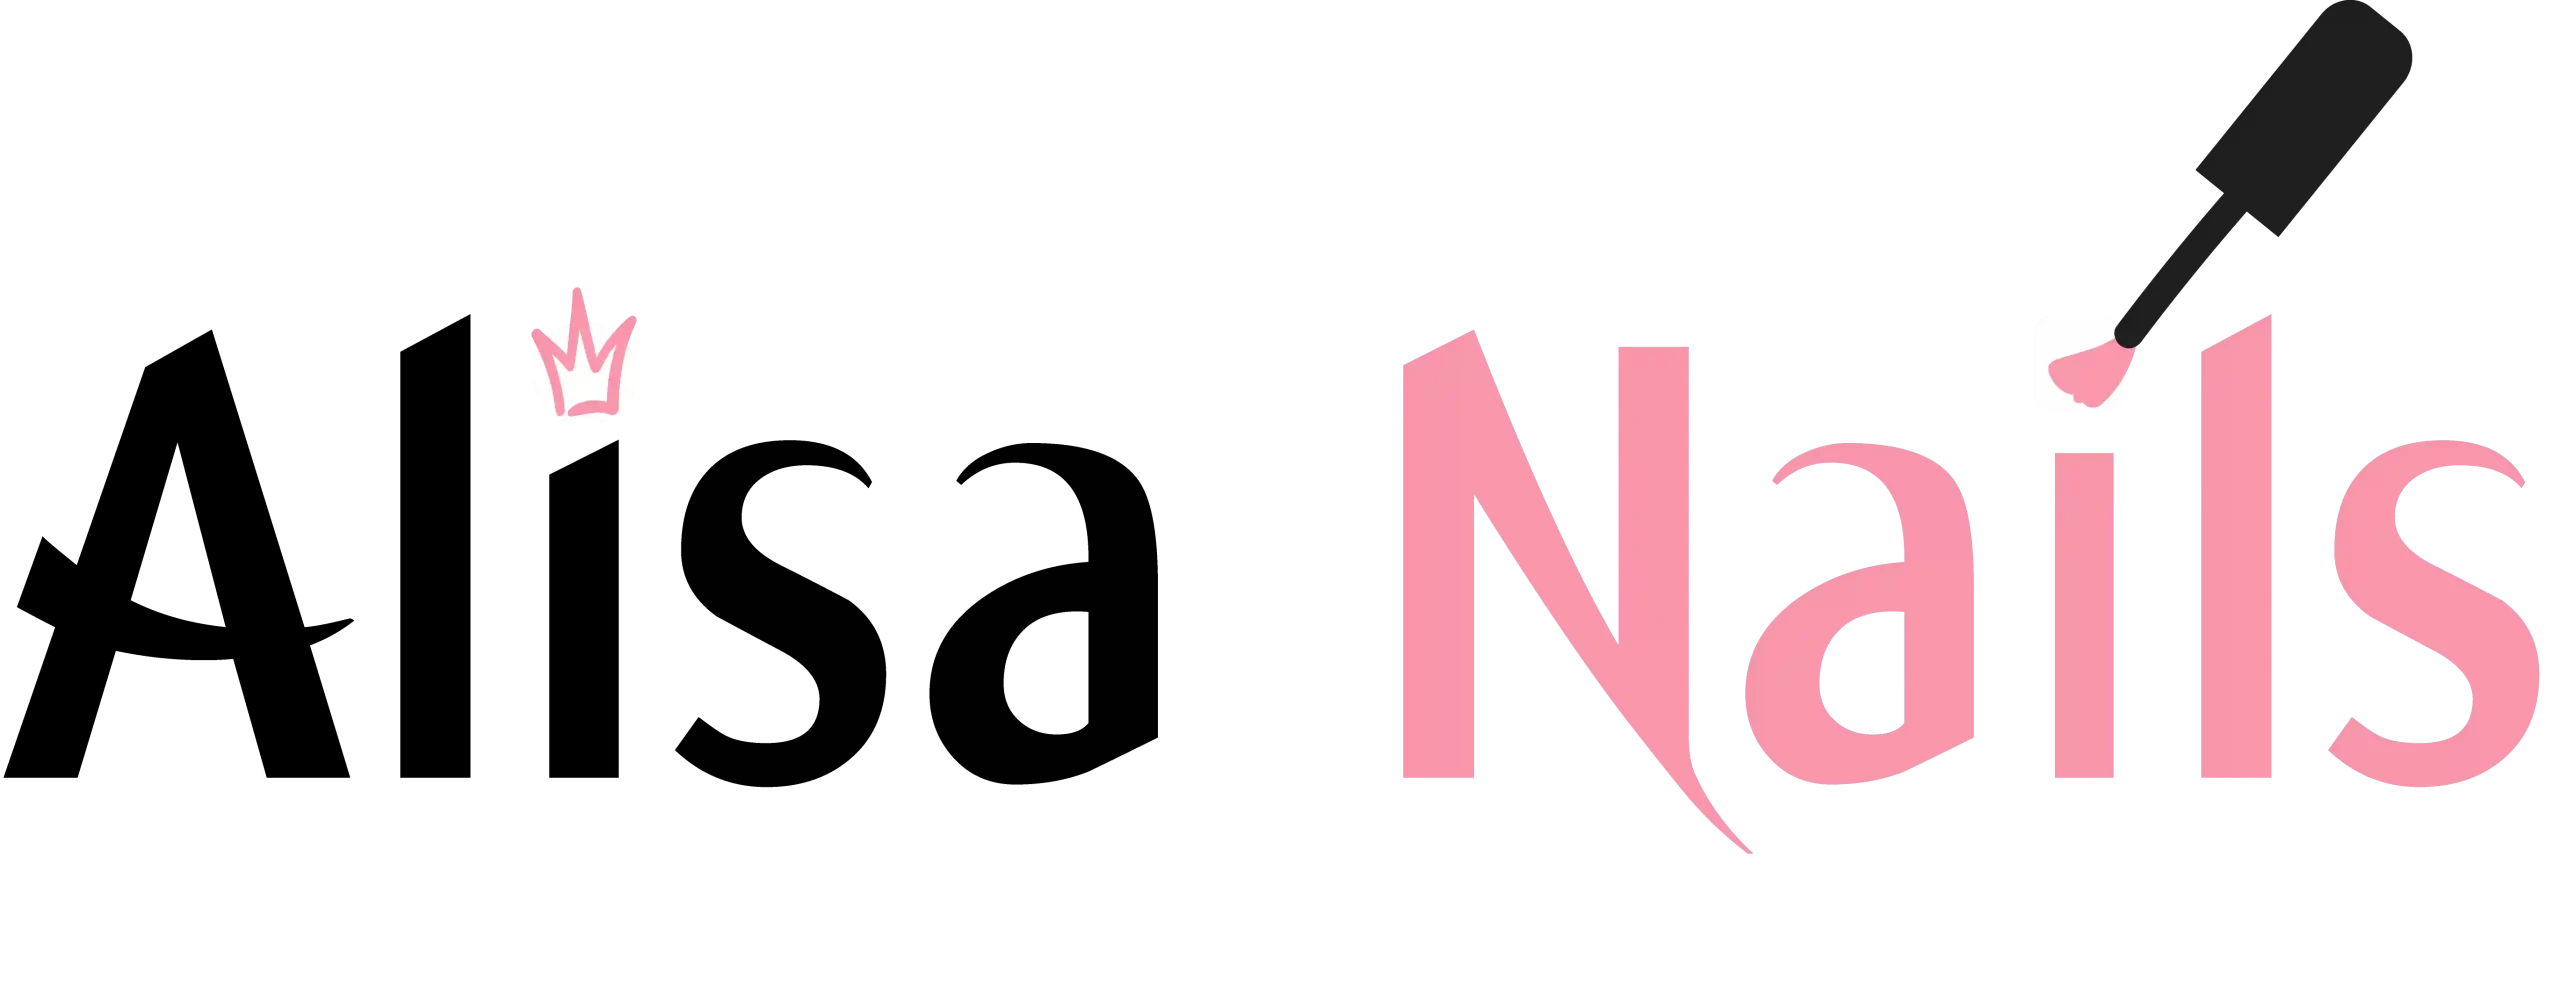 Alisa Nails logo horizontal